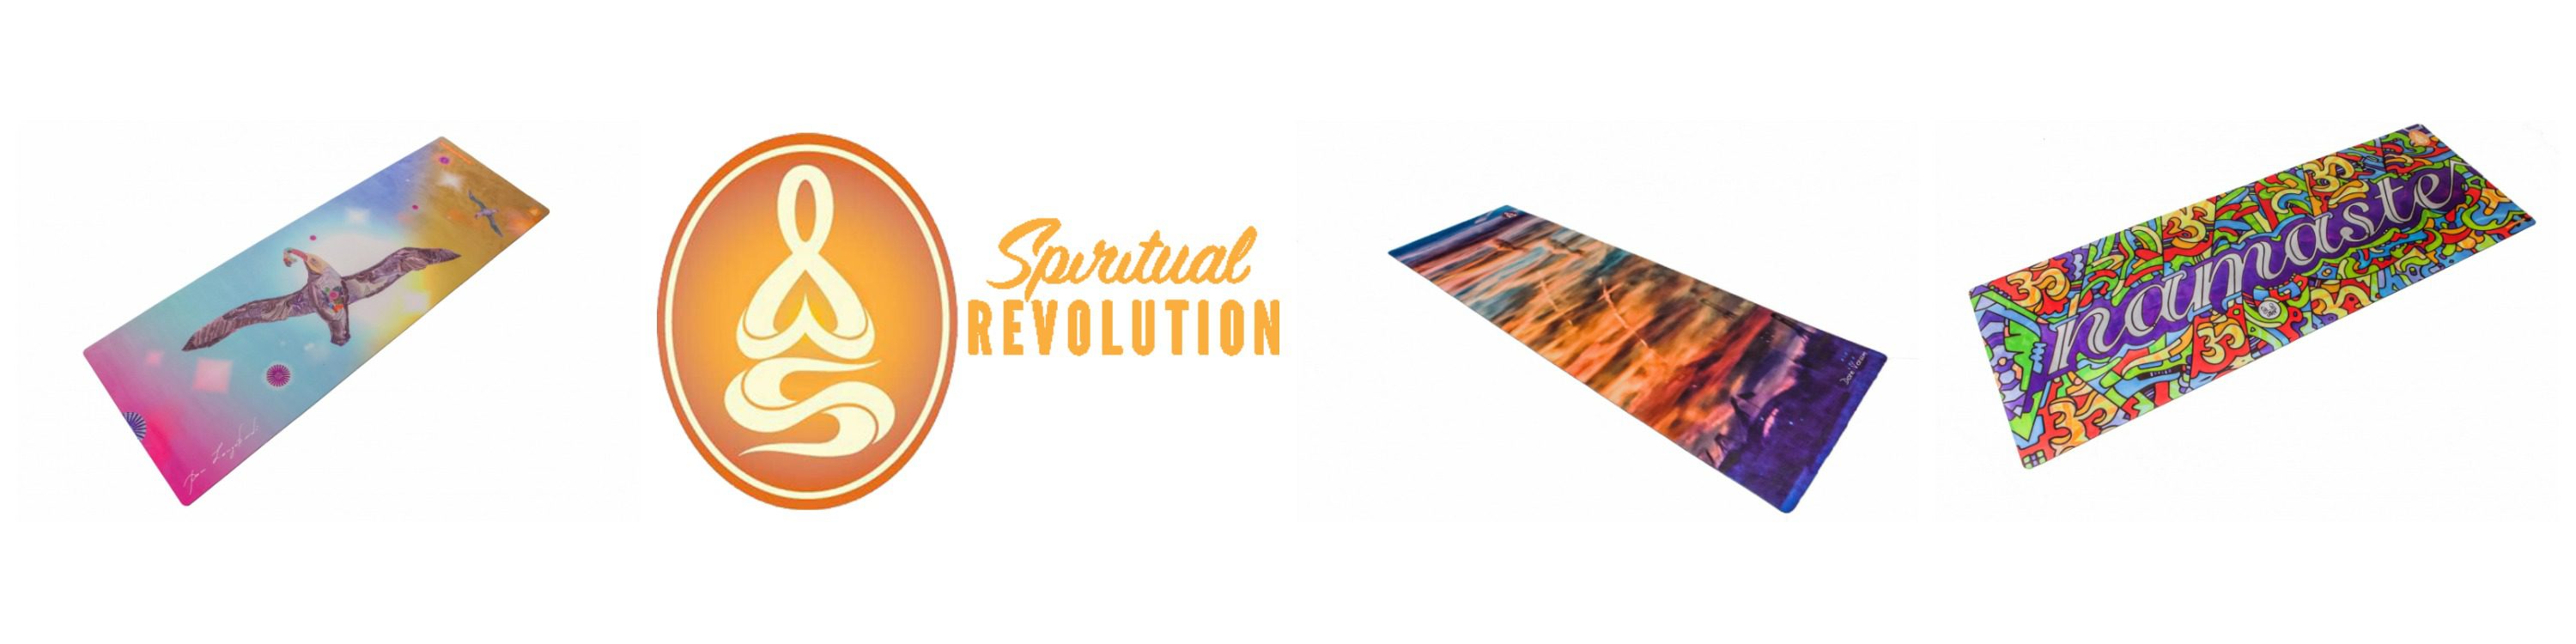 spiritual-revolution-collage